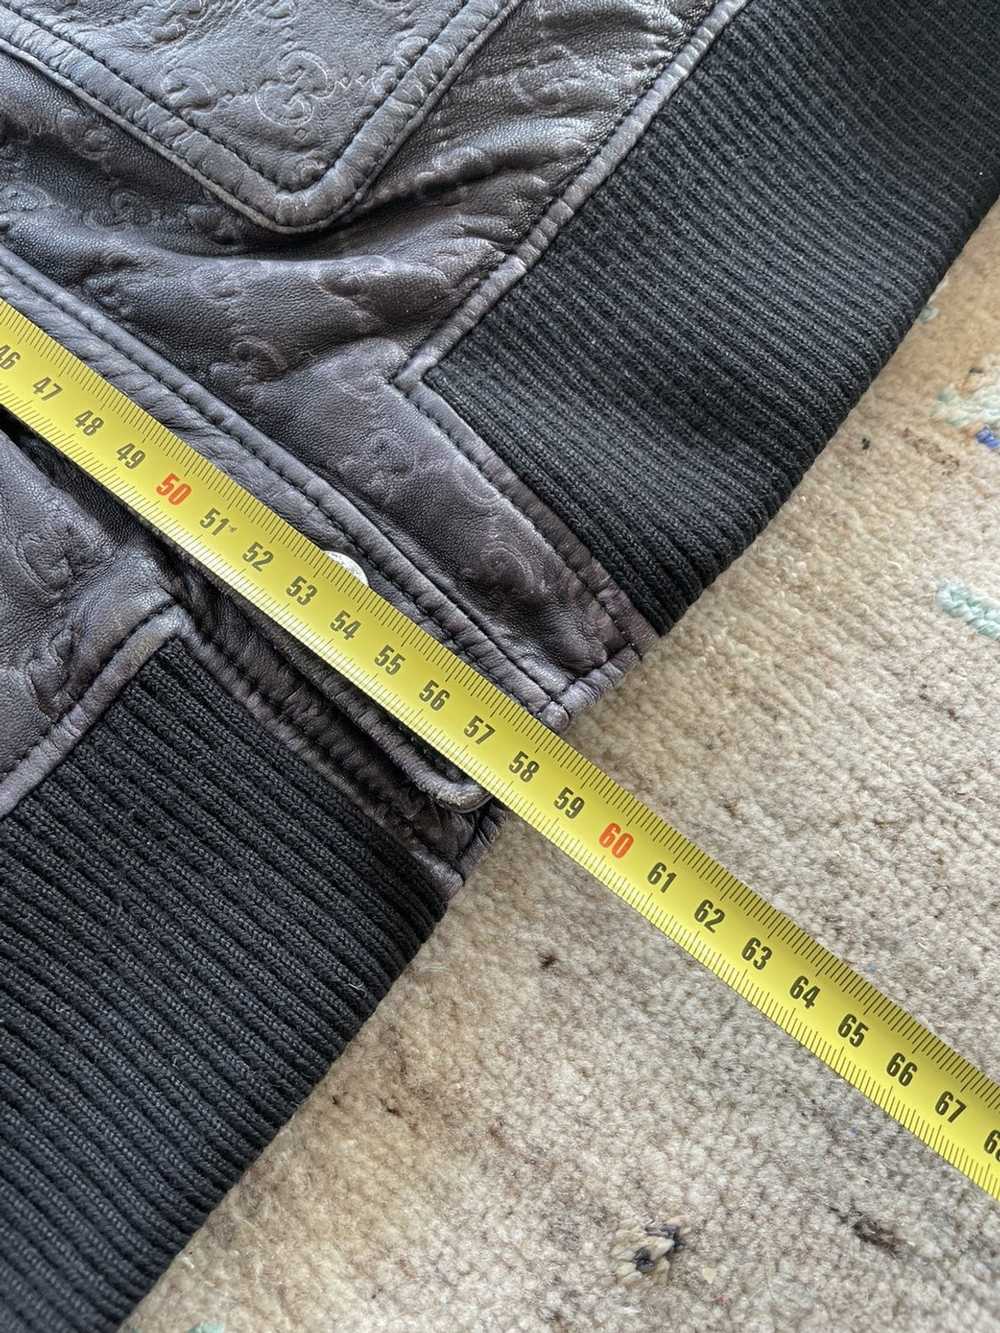 Gucci GG Monogram leather jacket - image 8